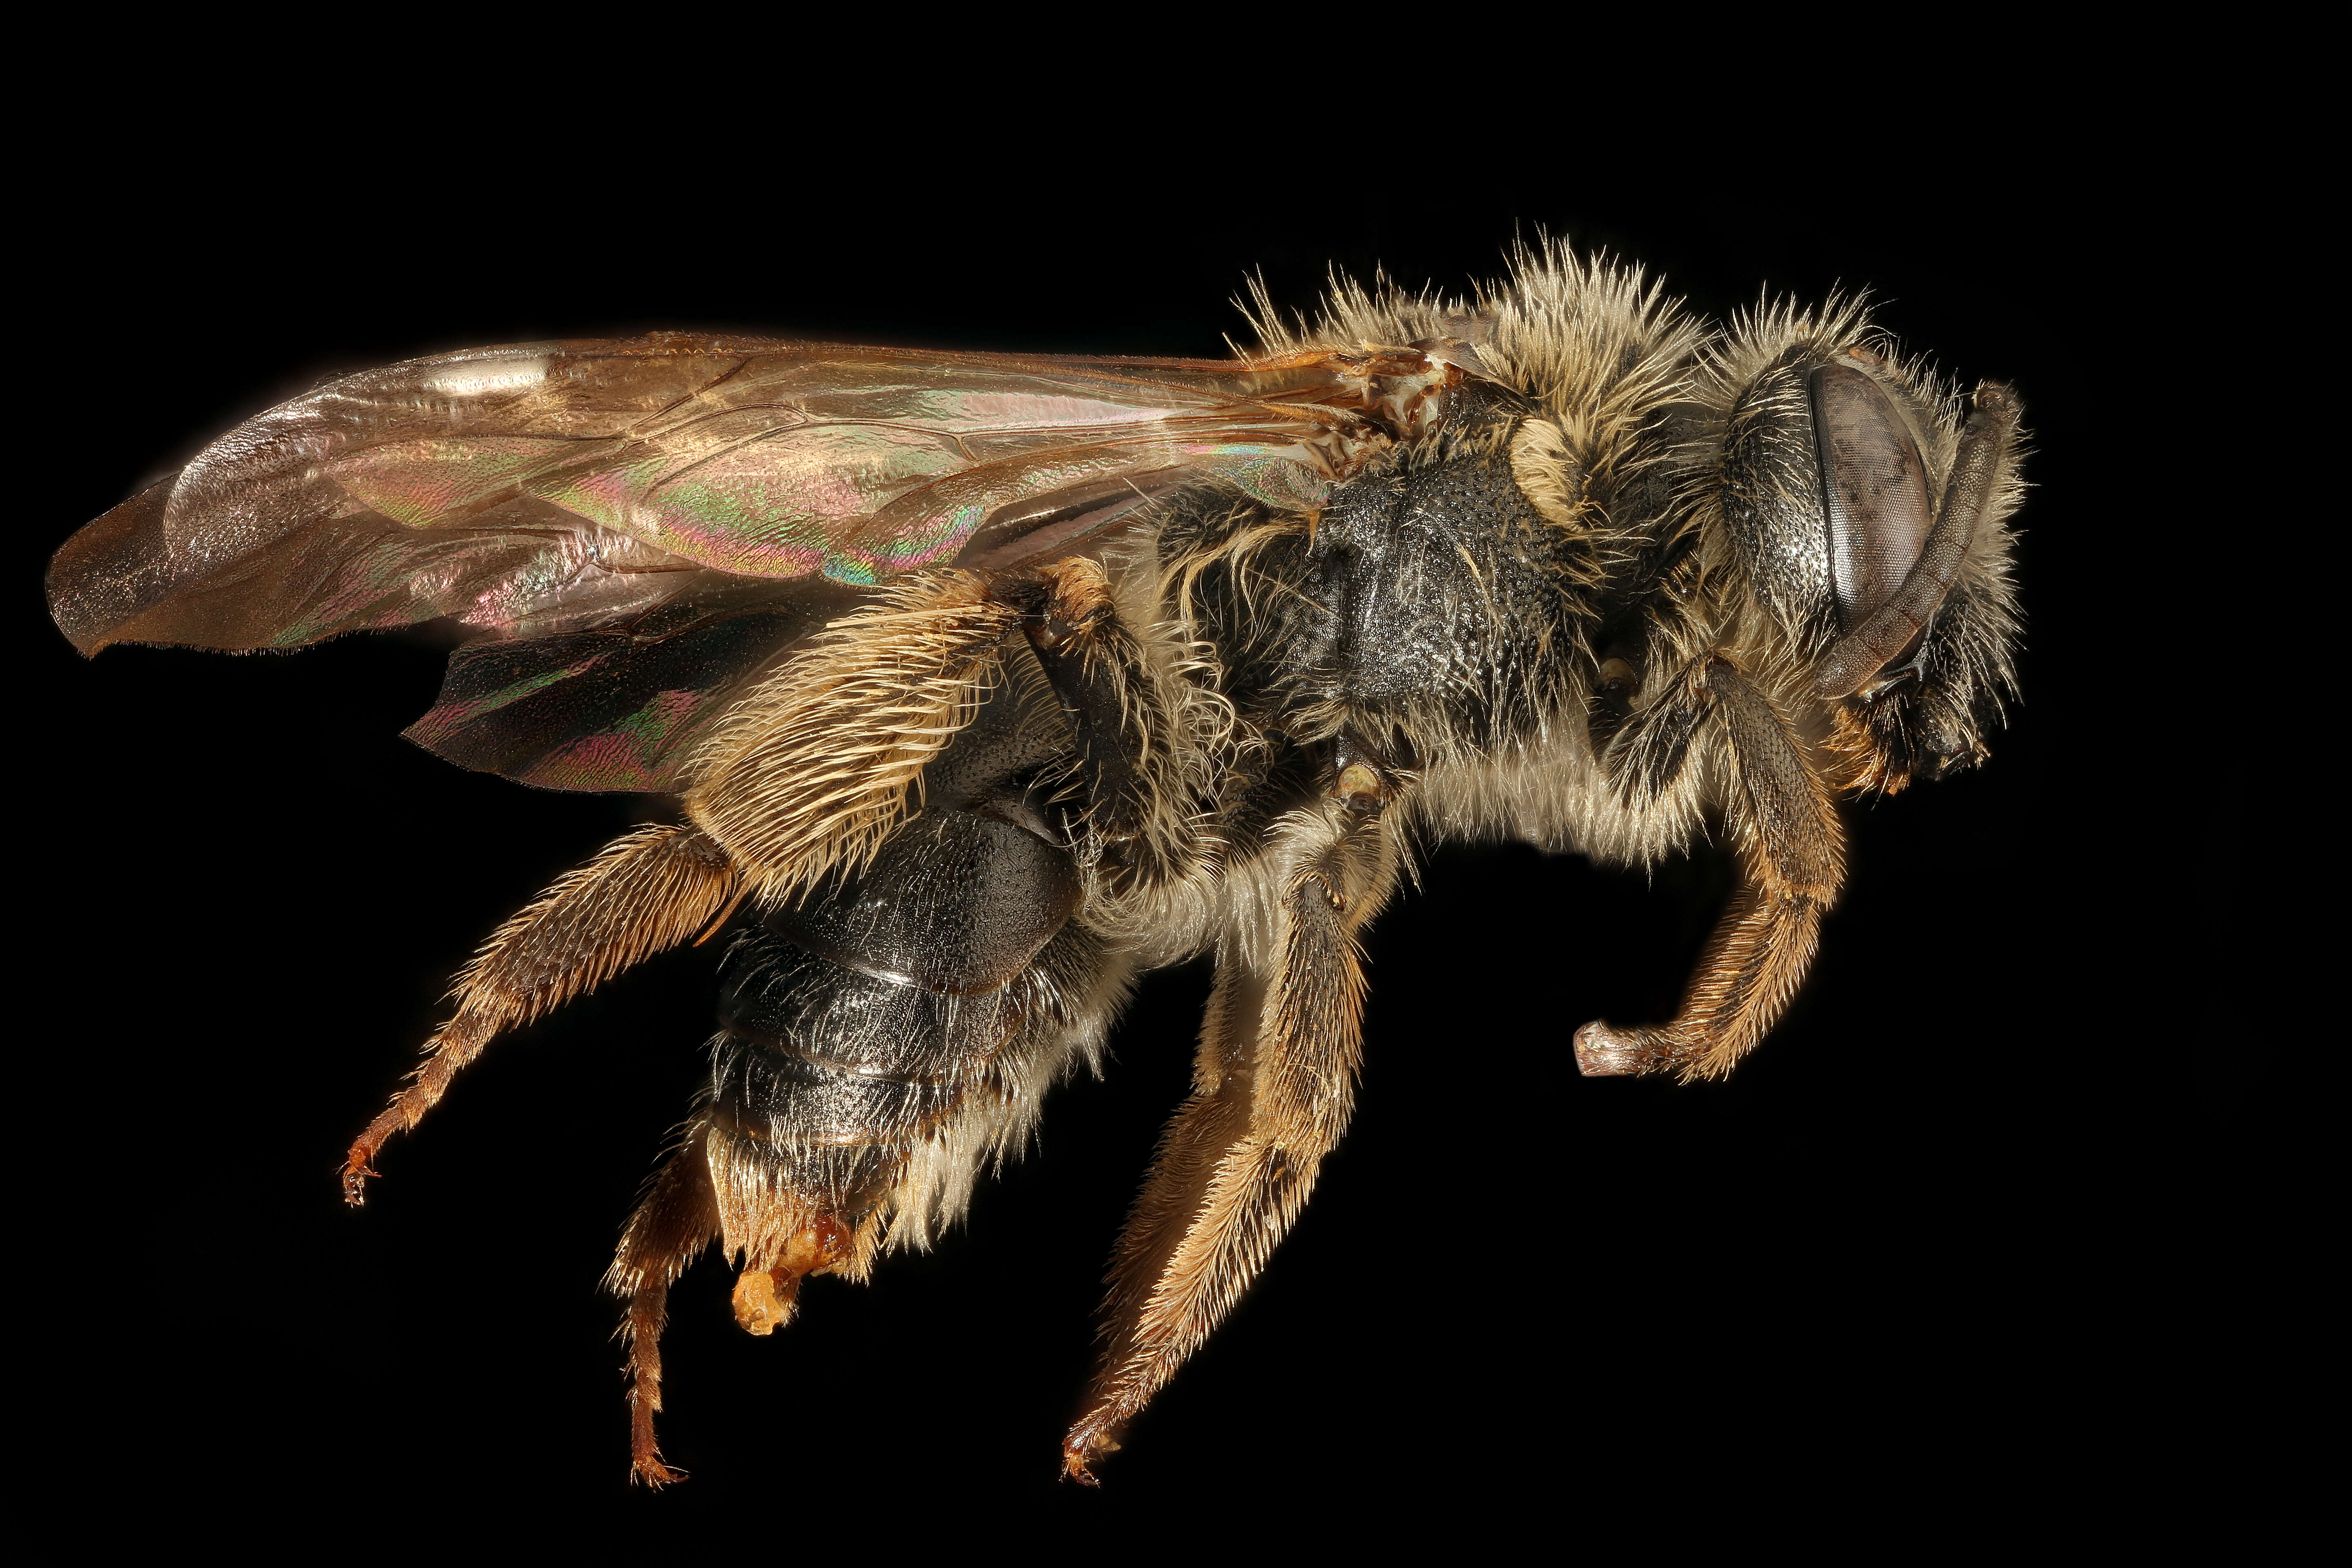 Image of Andrena forbesii Robertson 1891